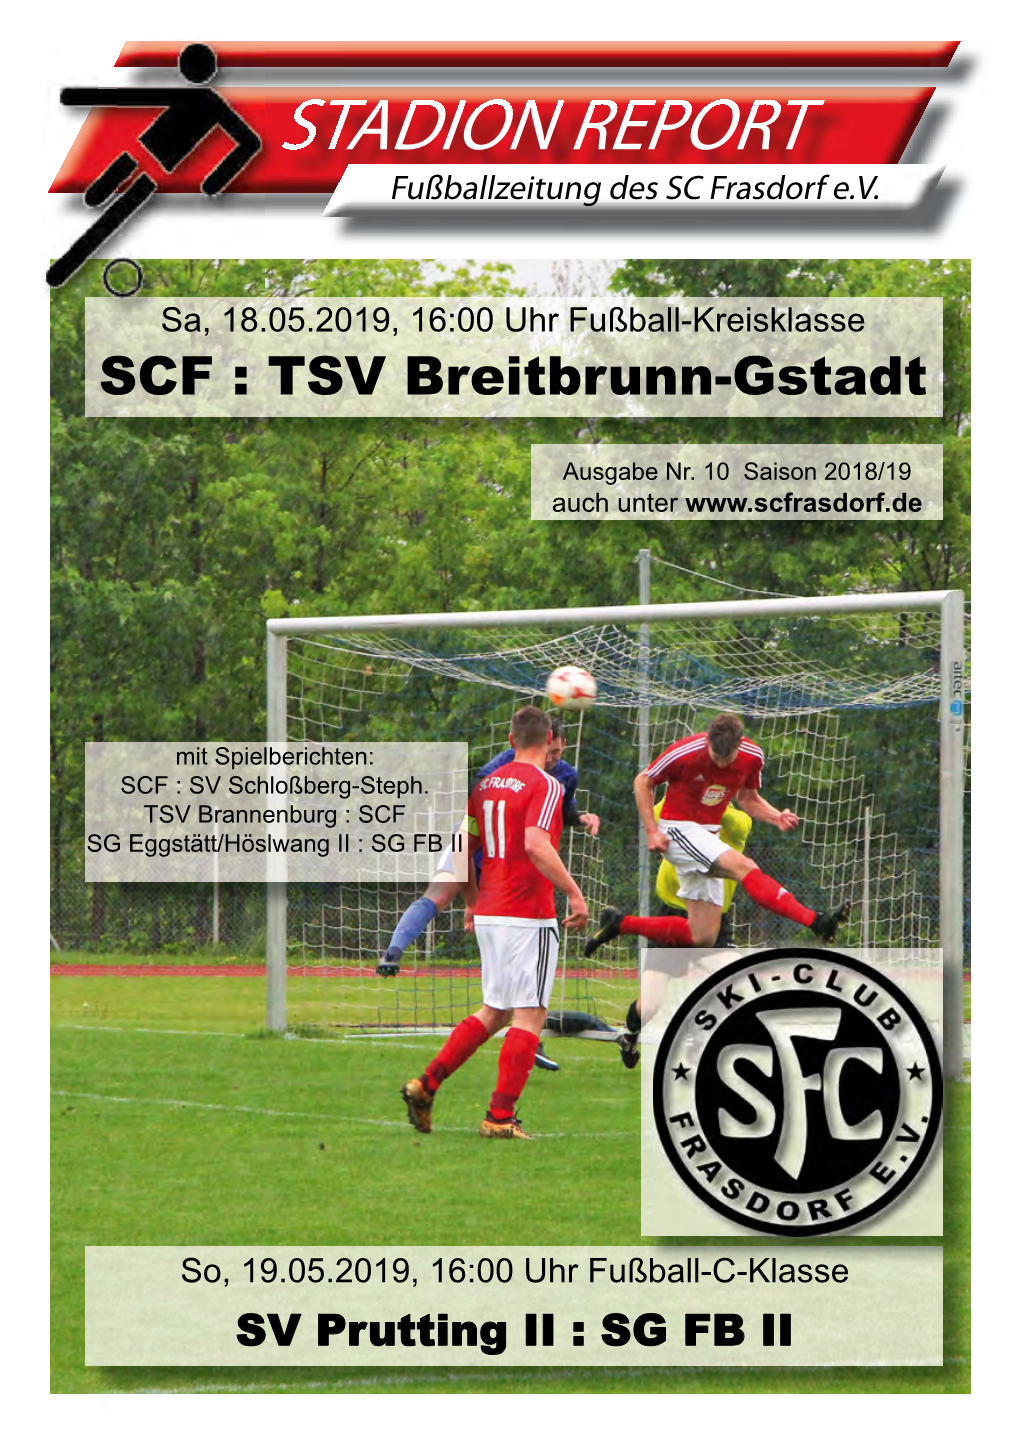 STADION REPORT Fußballzeitung Des SC Frasdorf E.V